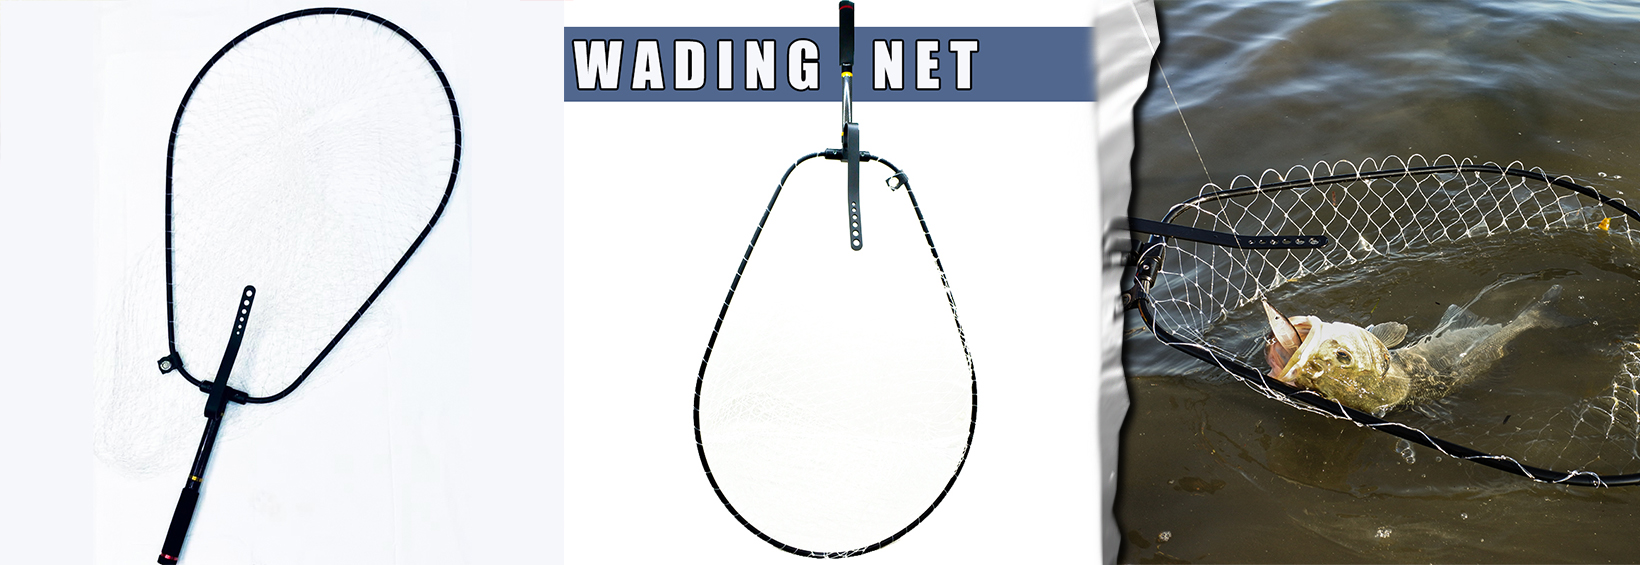 WADING NET